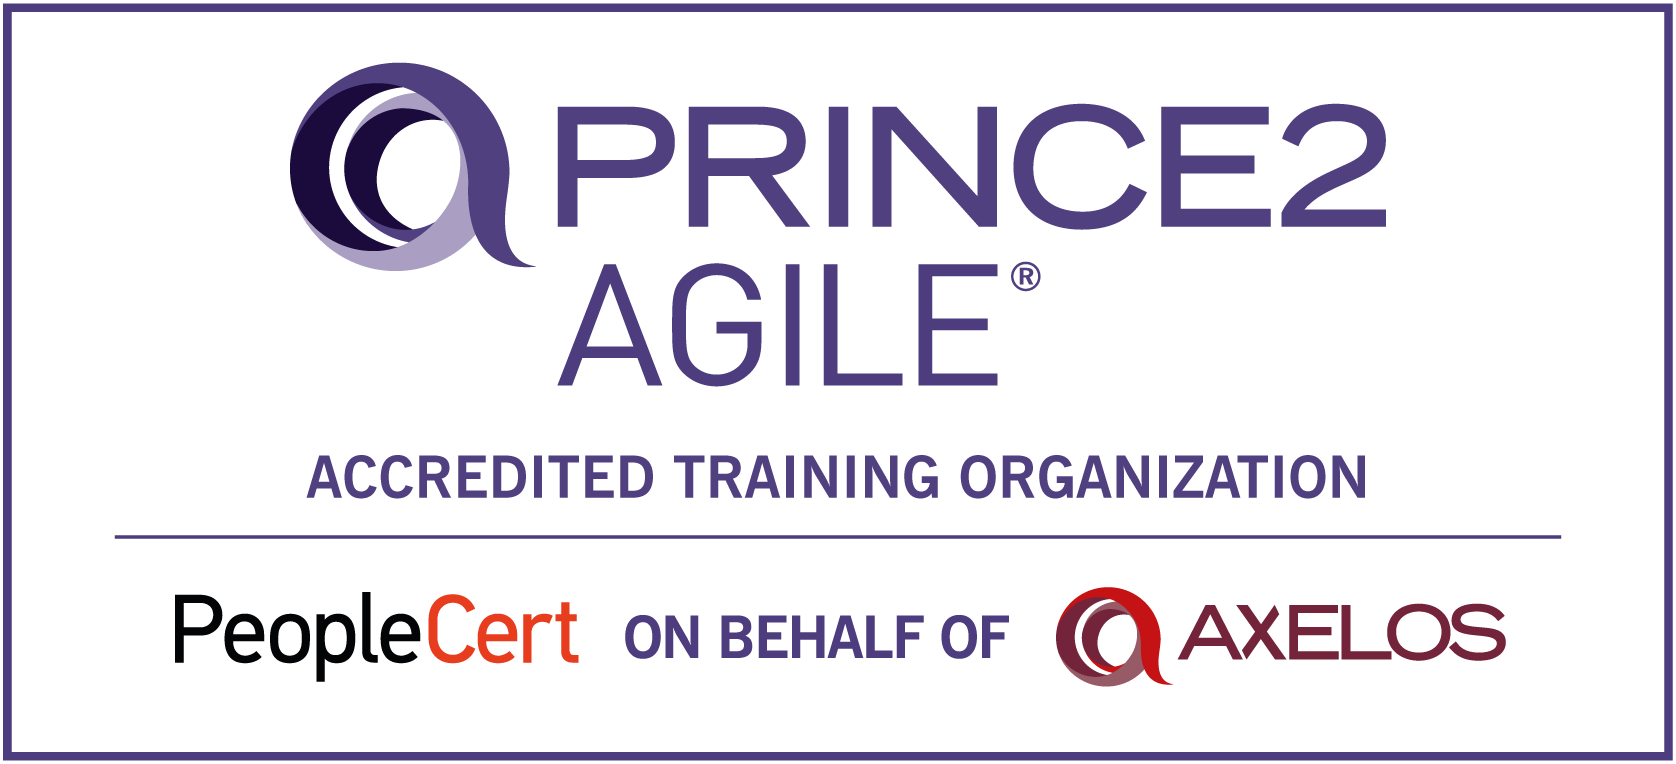 PRINCE2 Agile AXELOS  Training Partner - PRAGO